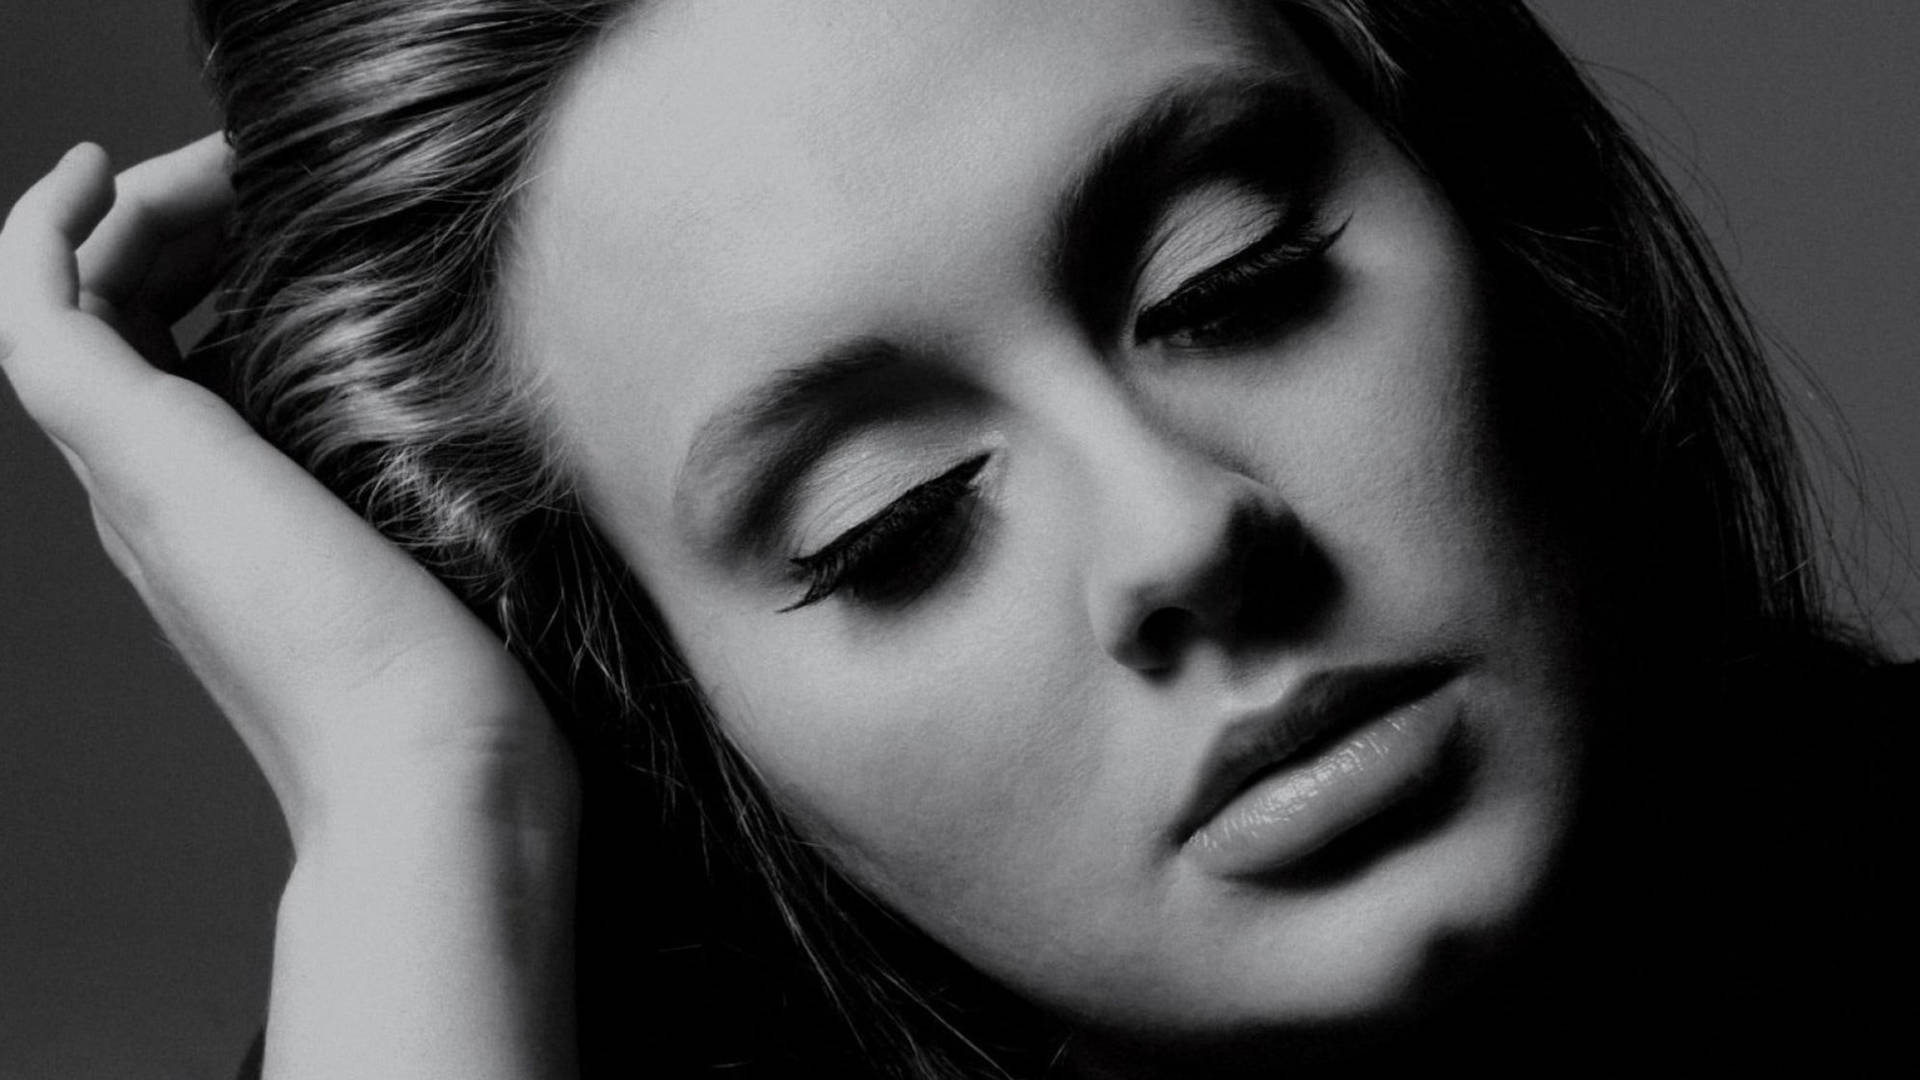 Adele 21 Album Cover Wallpaper